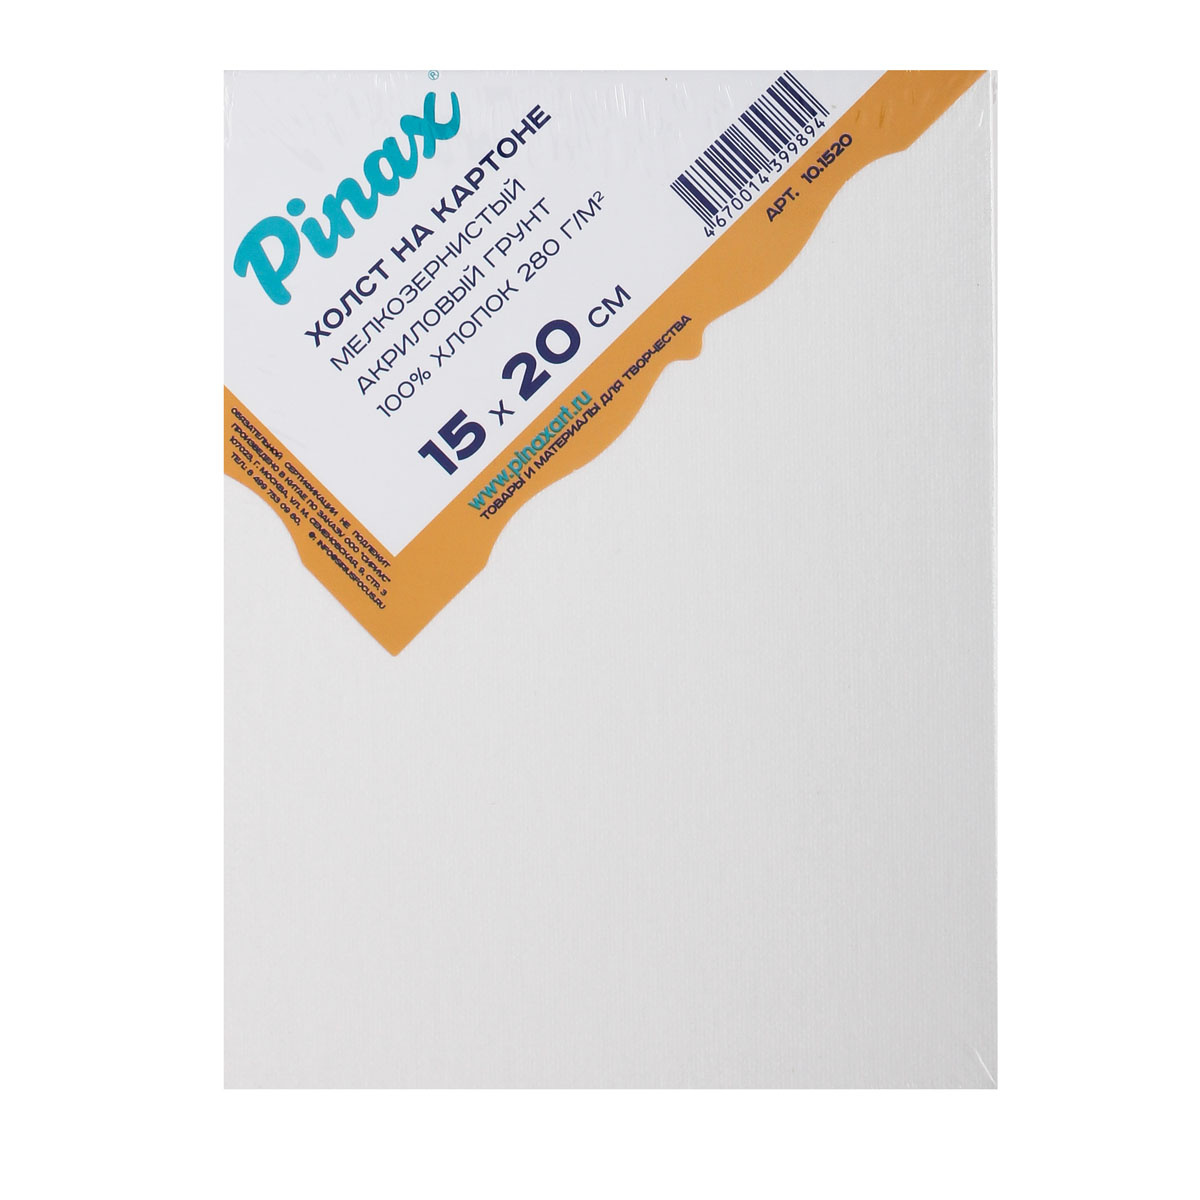 Холст грунтованный на картоне Pinax 280 г 15x20 см холст грунтованный на картоне pinax 280 г 50x70 см